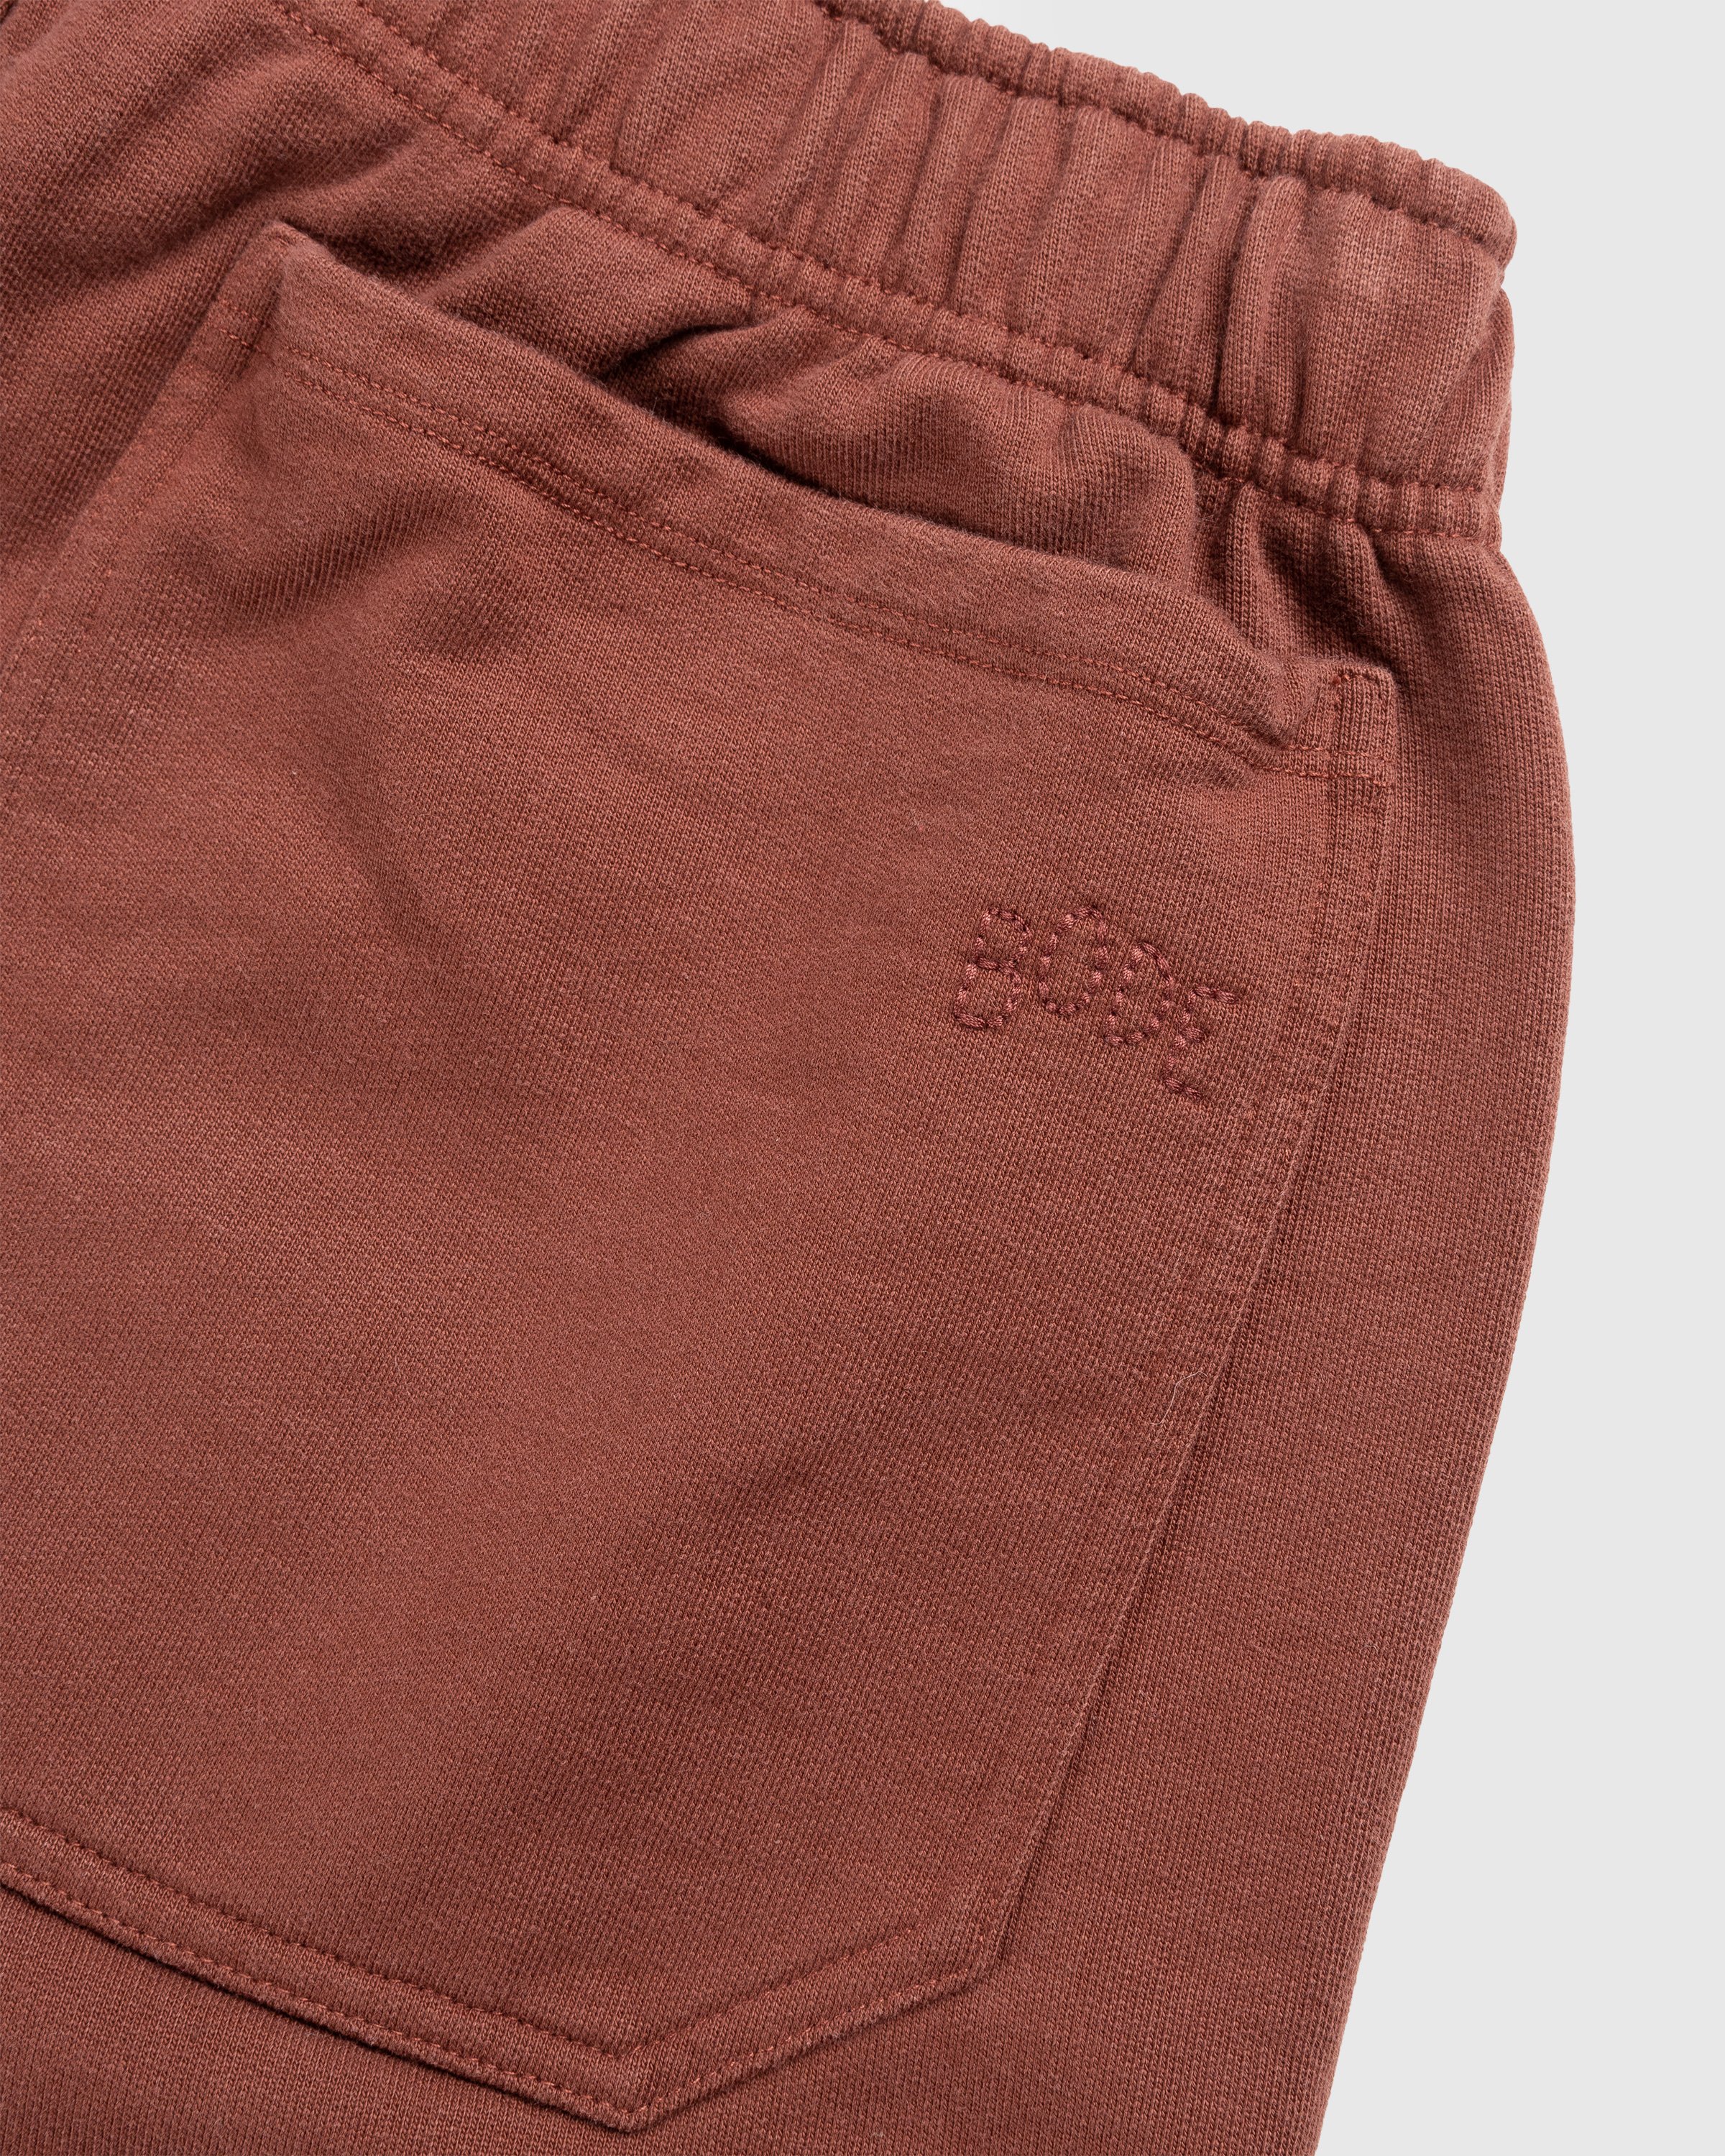 Bode - Sweatpant - Clothing - Brown - Image 6